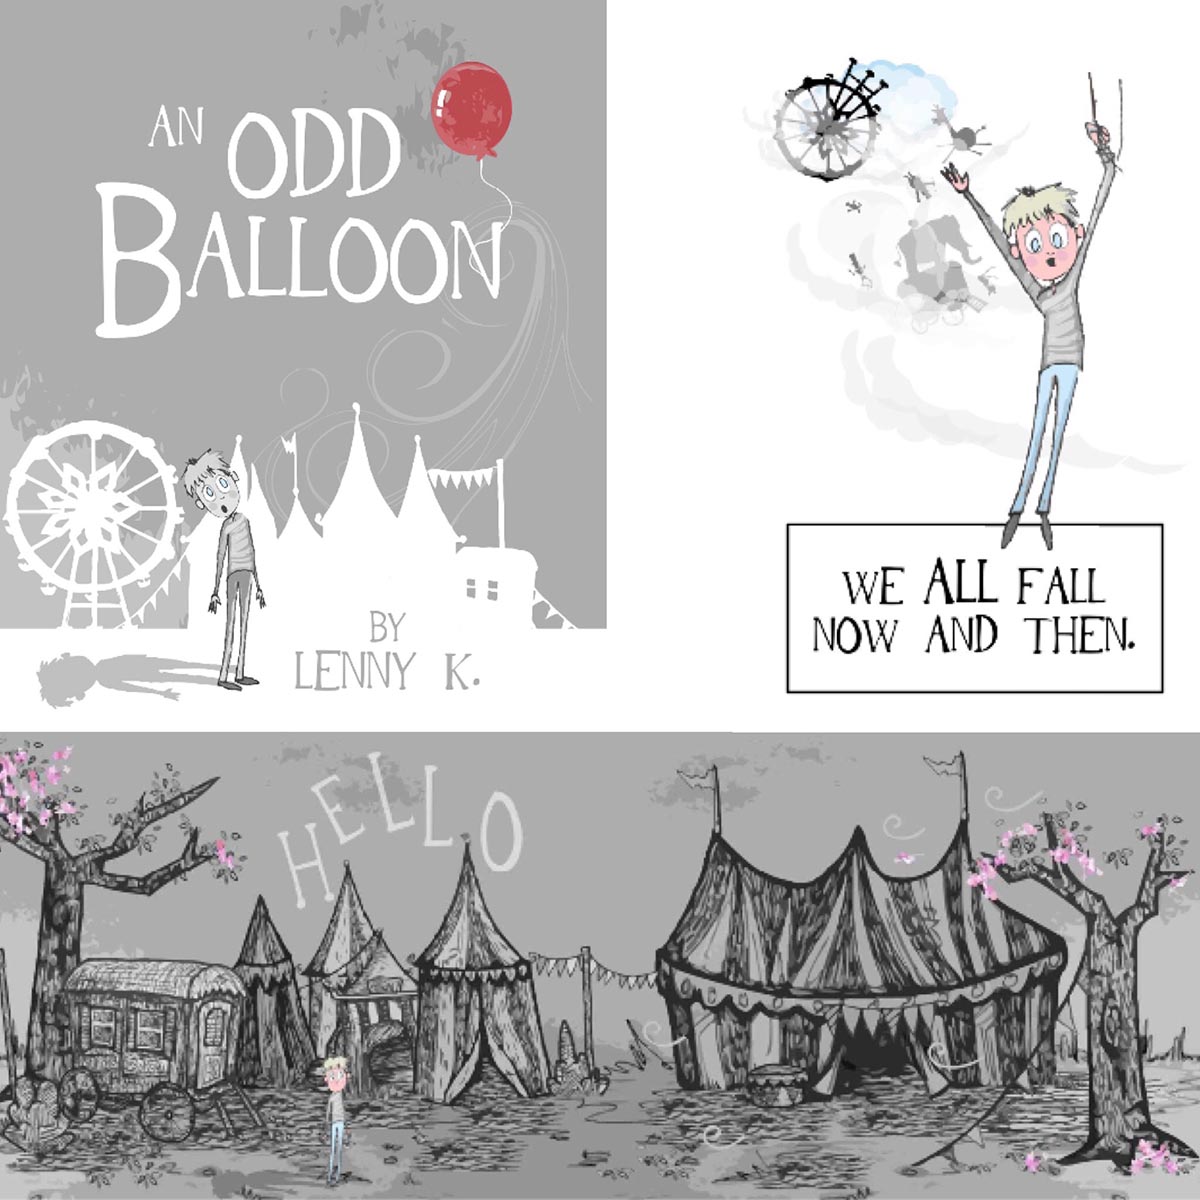 "The Odd Balloon Boy" by Leonard Wells Kenyon